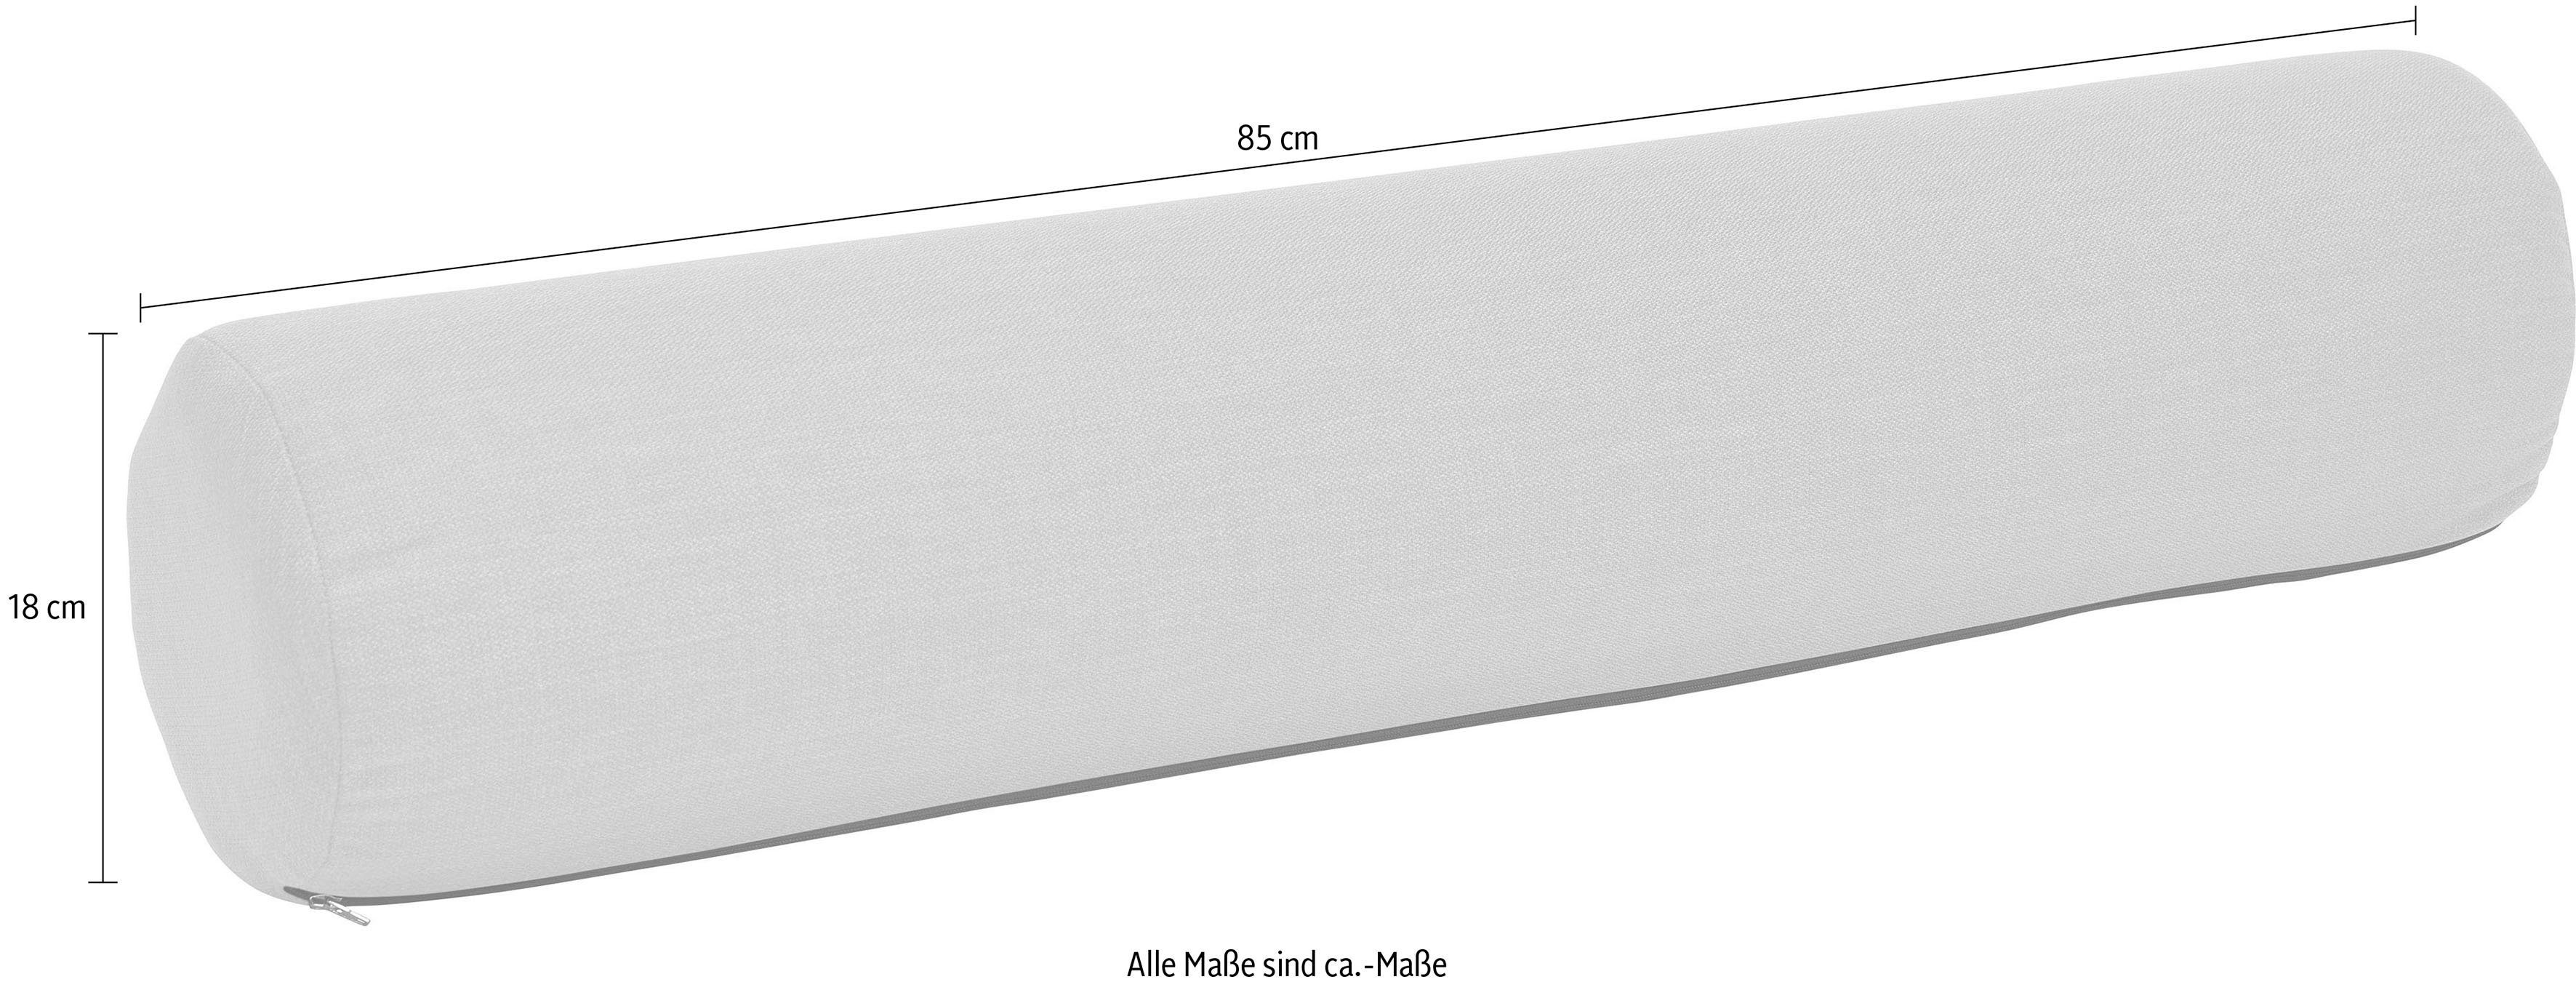 Müller SMALL LIVING Kopfstütze RG-25-Nackenrolle, flieder Fiord 0662 KVADRAT Stoff Designstoff hochwertigem bezogen 2 in